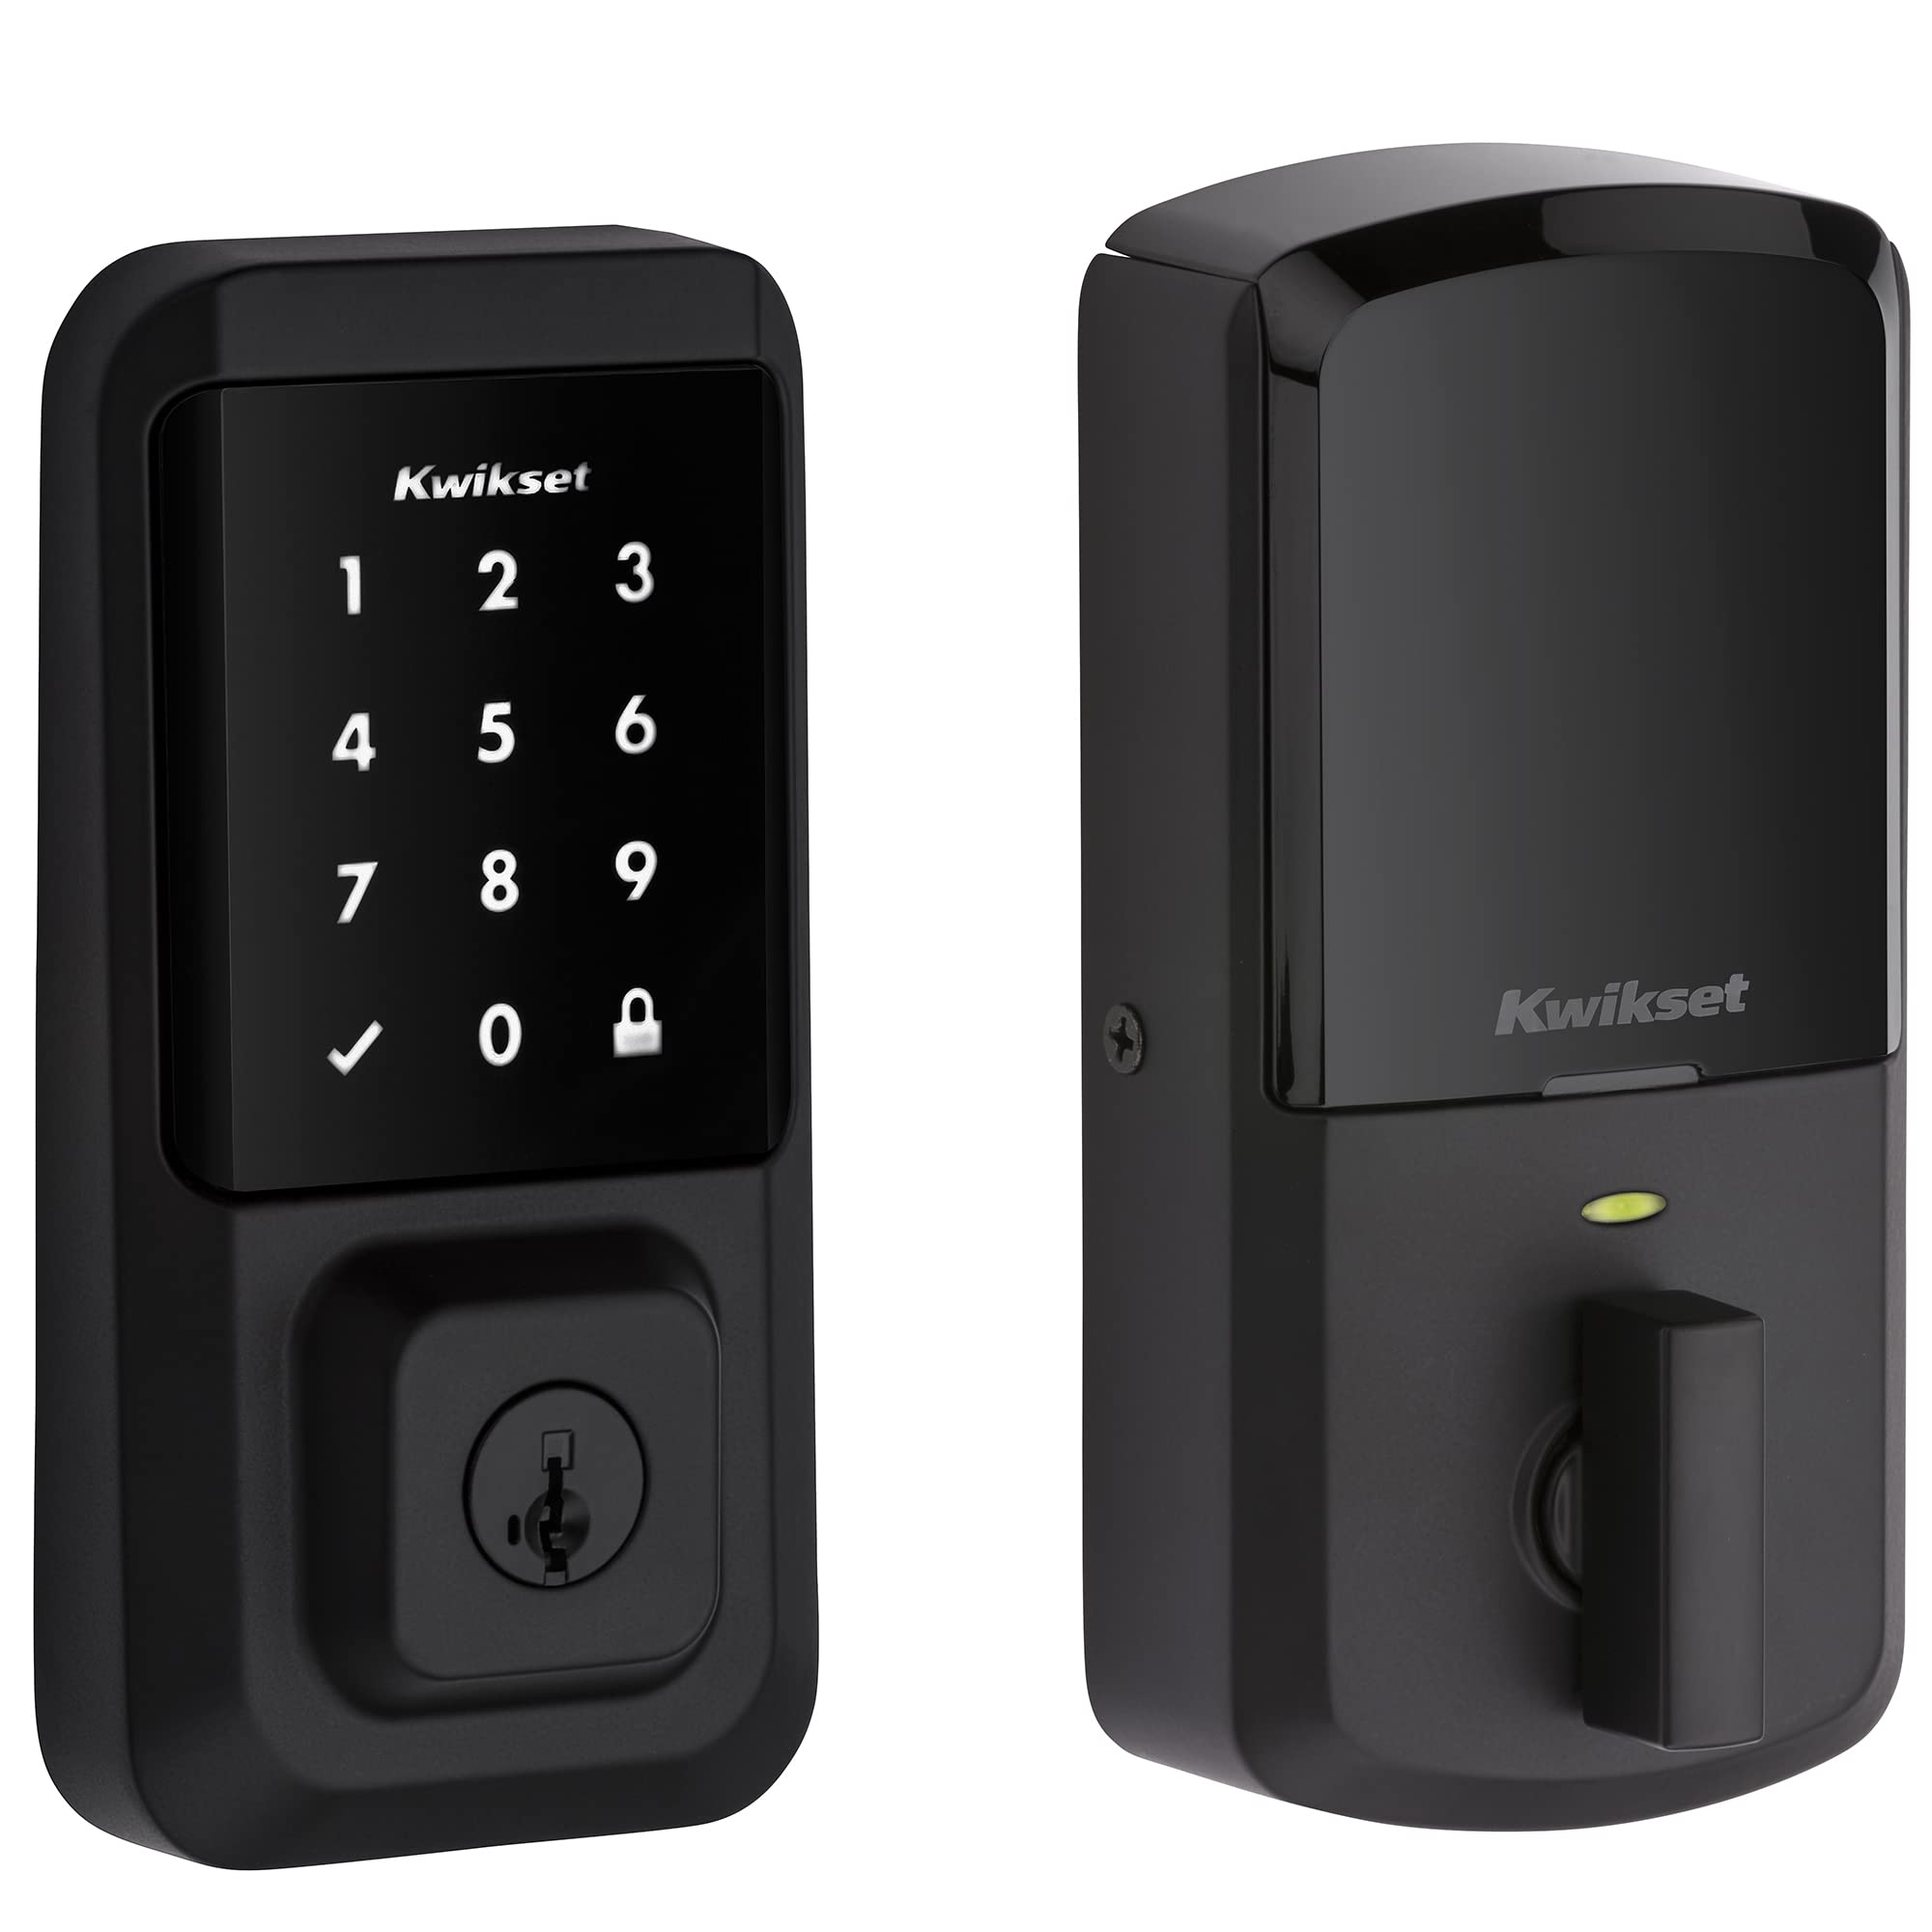 Kwikset 99390-001 Halo Wi-Fi Smart Lock Keyless Entry Electronic Touchscreen Deadbolt Featuring SmartKey Security